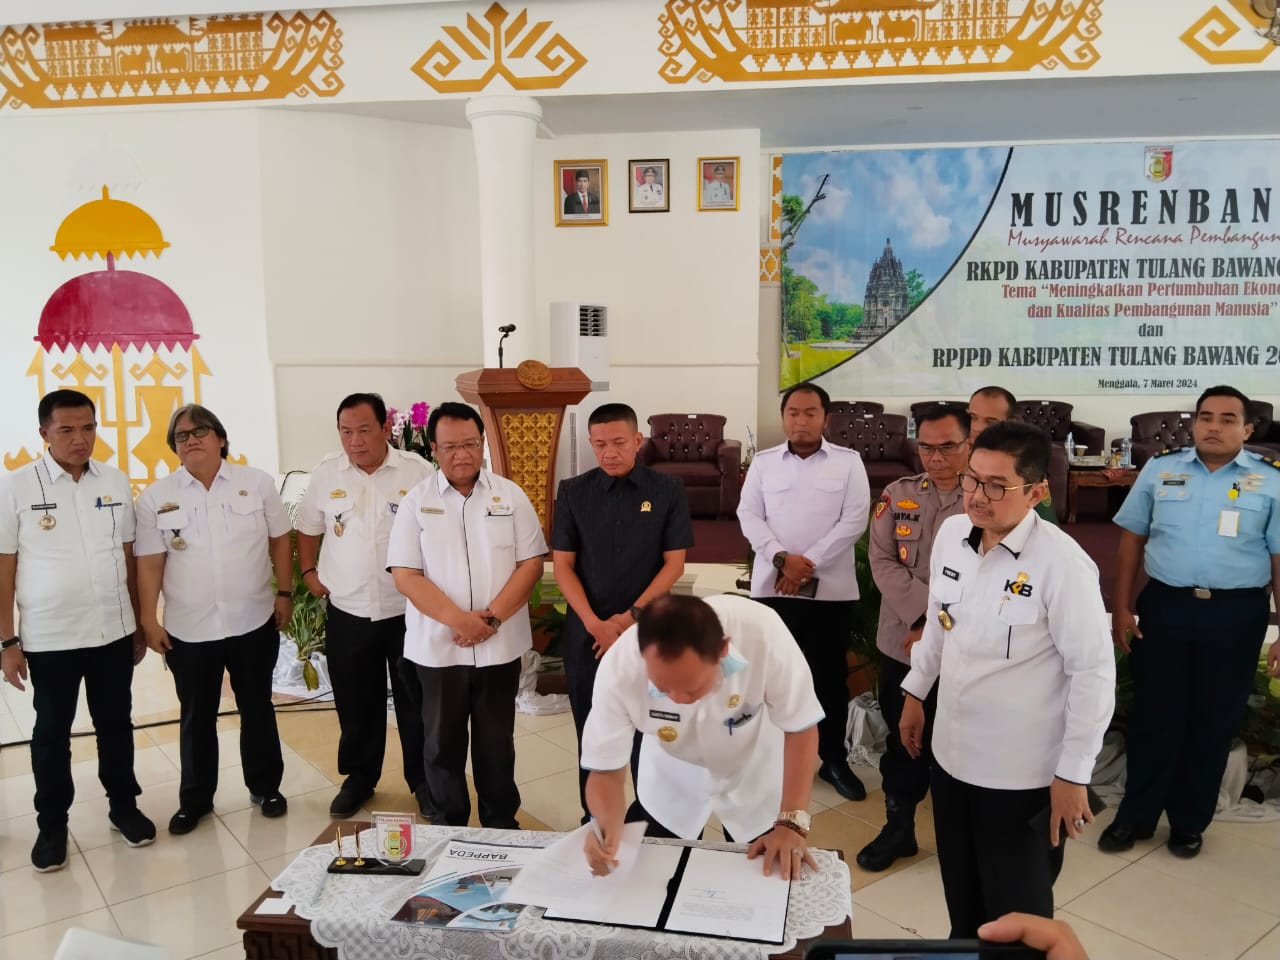 Musrenbang Kabupaten Fokus pada 6 Bidang Pembangunan Tuba 2025